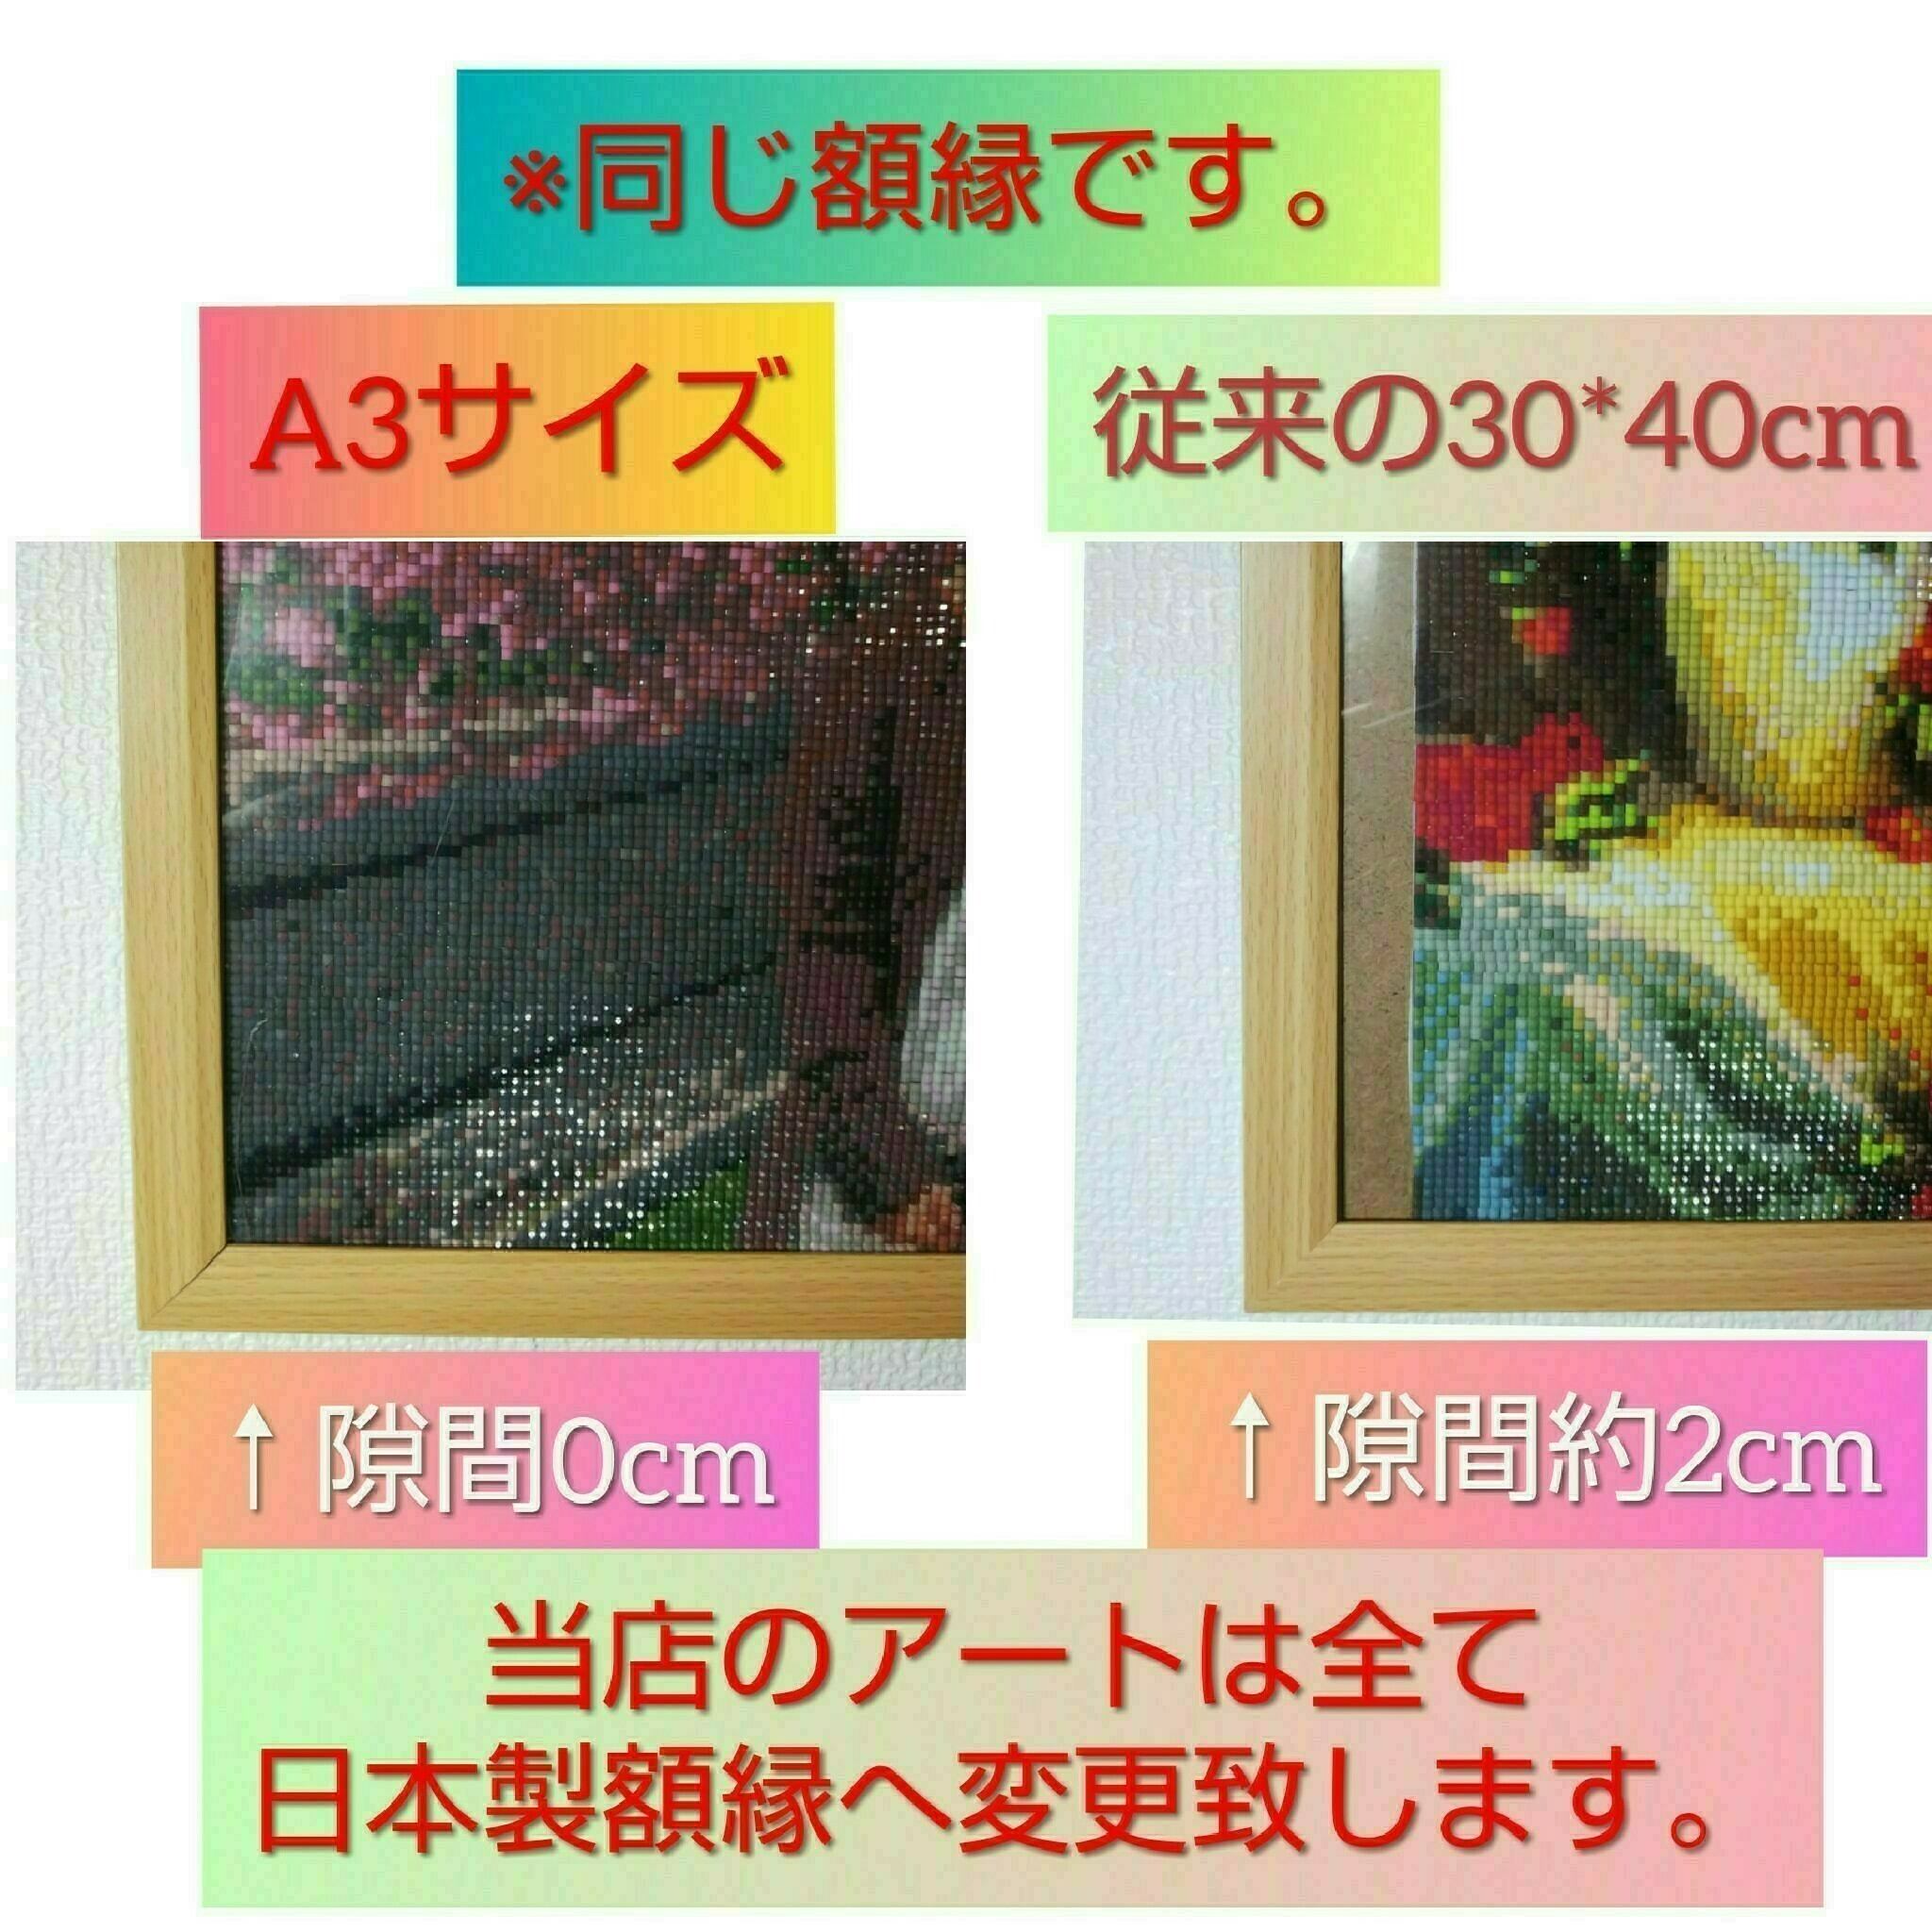 A3サイズ 四角ビーズ【fan-001】フルダイヤモンドアート